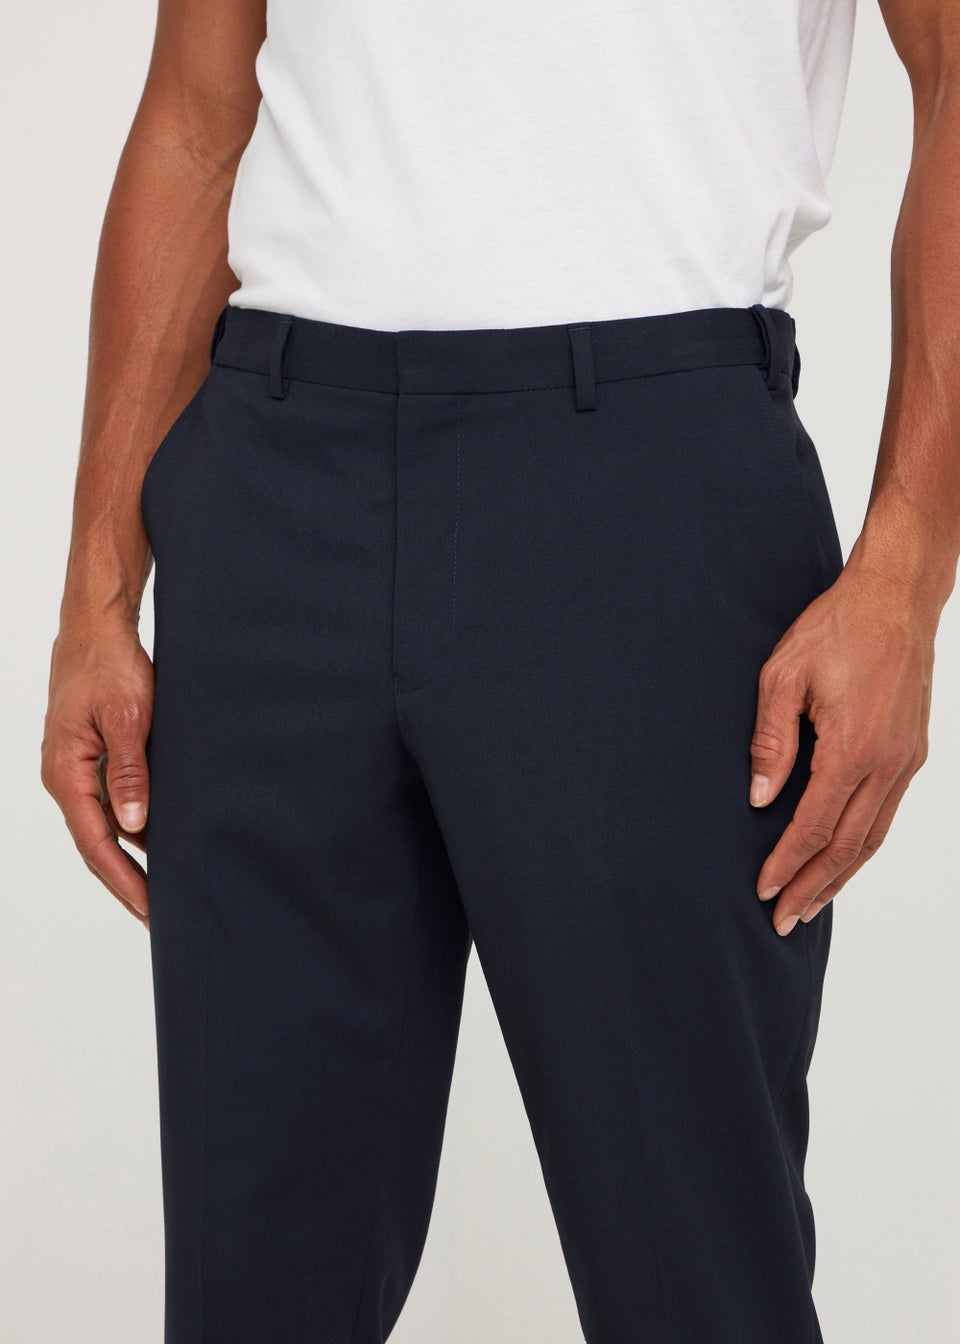 Taylor & Wright Navy Slim Fit Flexi Waist Trousers - Matalan